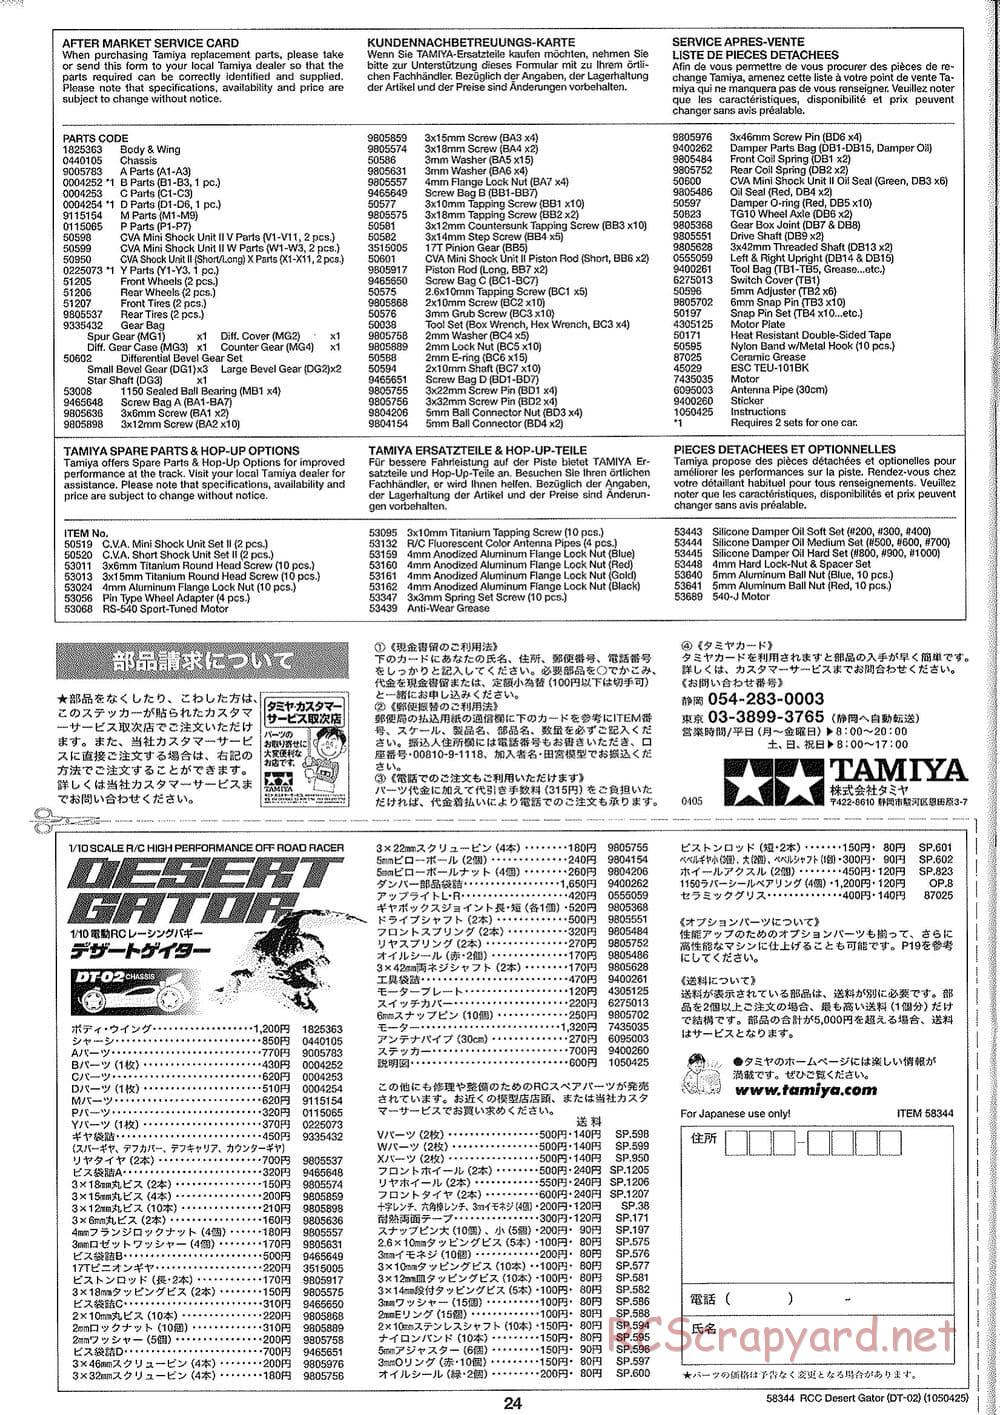 Tamiya - Desert Gator Chassis - Manual - Page 24